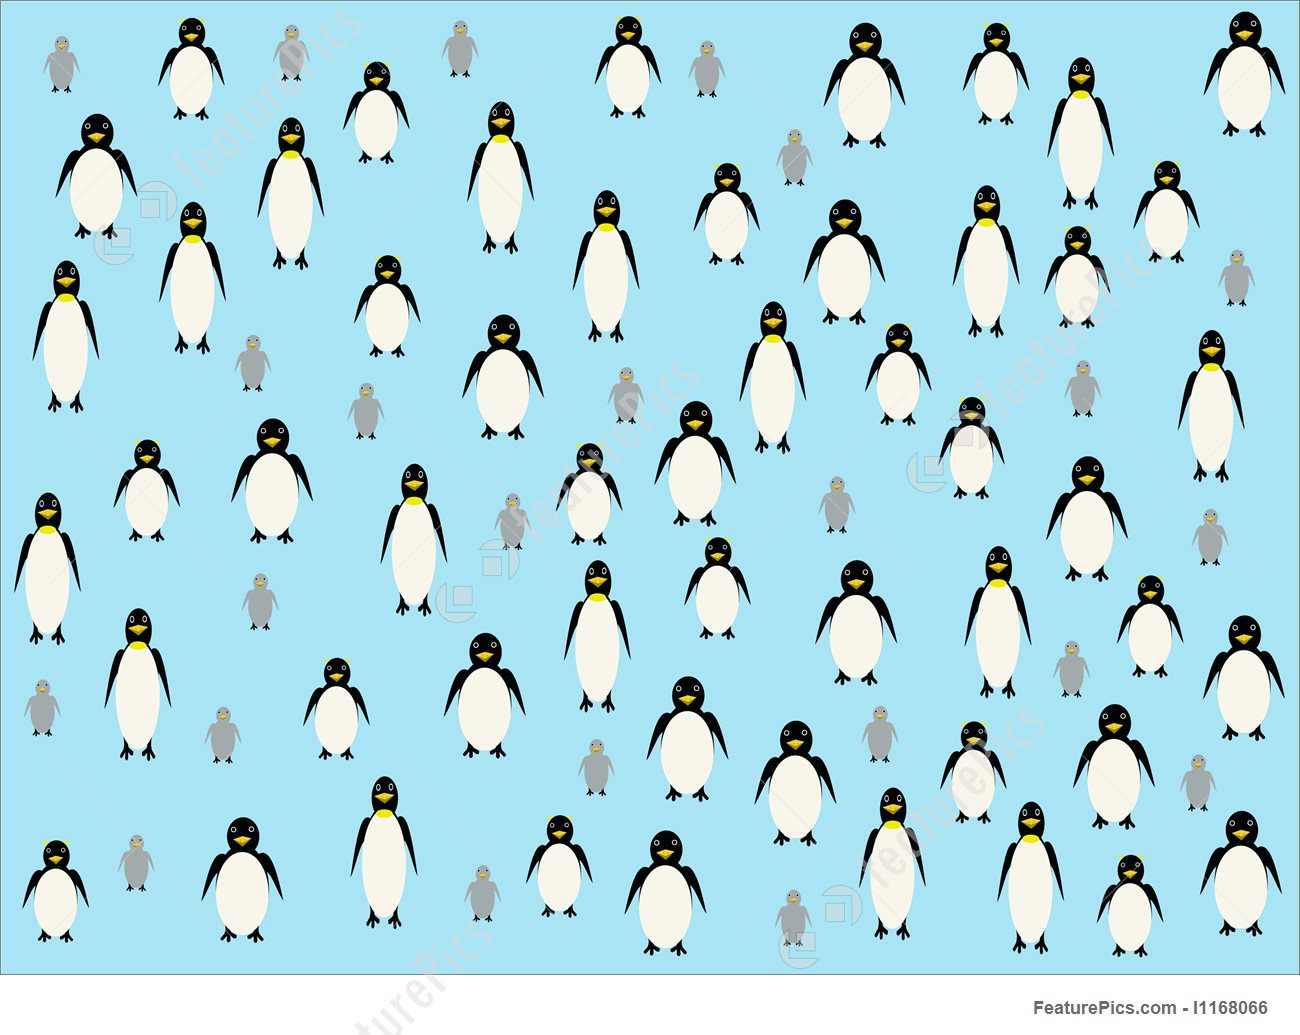 Penguin Background Stock Illustration I1168066 at FeaturePics